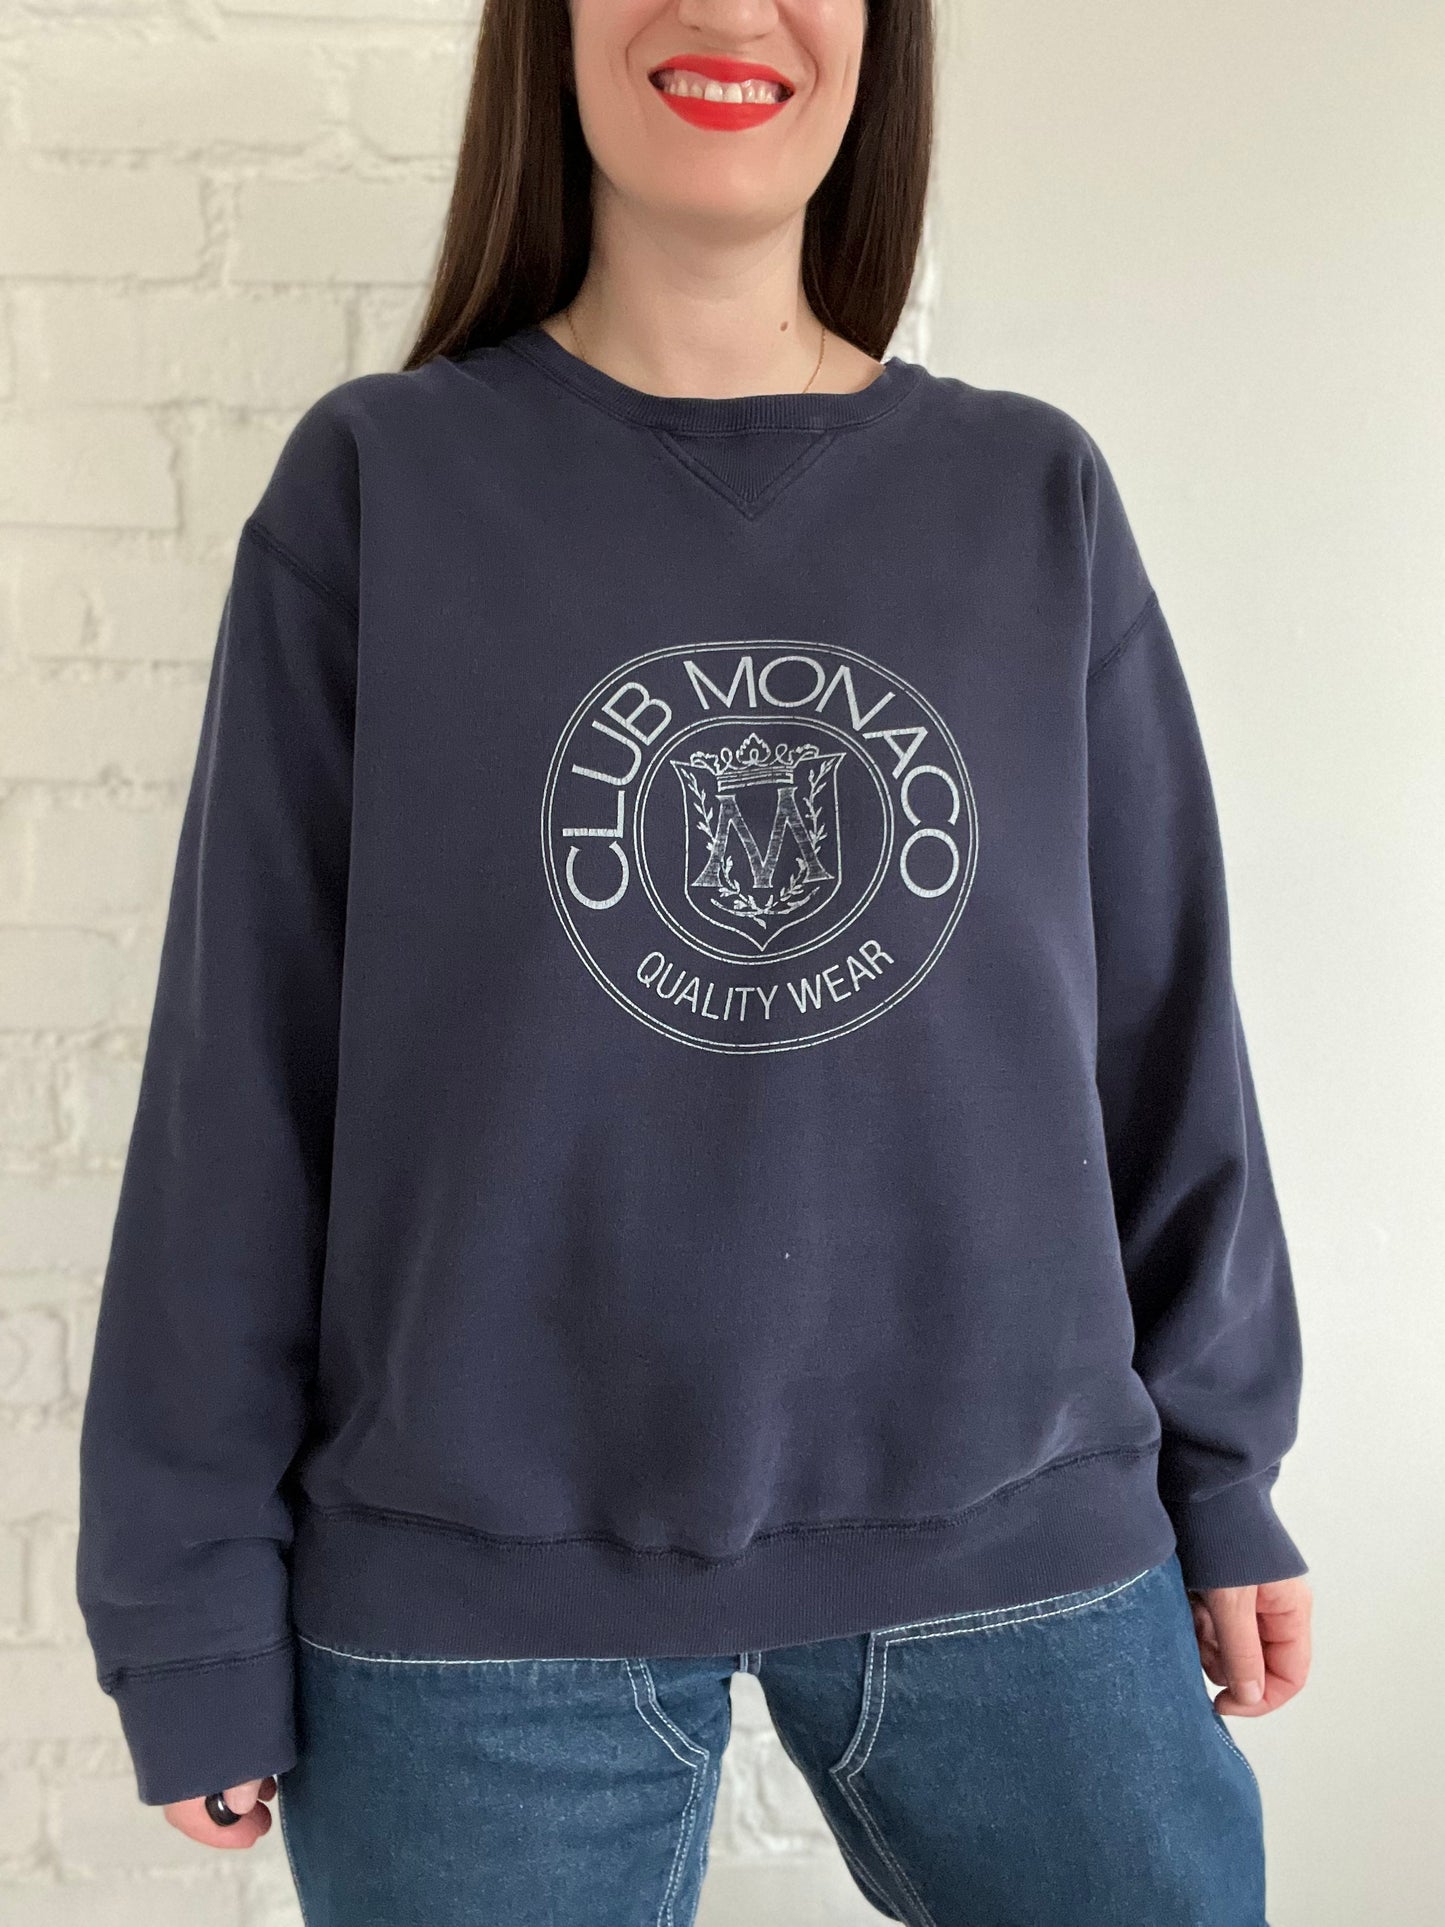 Vintage Club Monaco Heritage Crest Sweater - Mens L